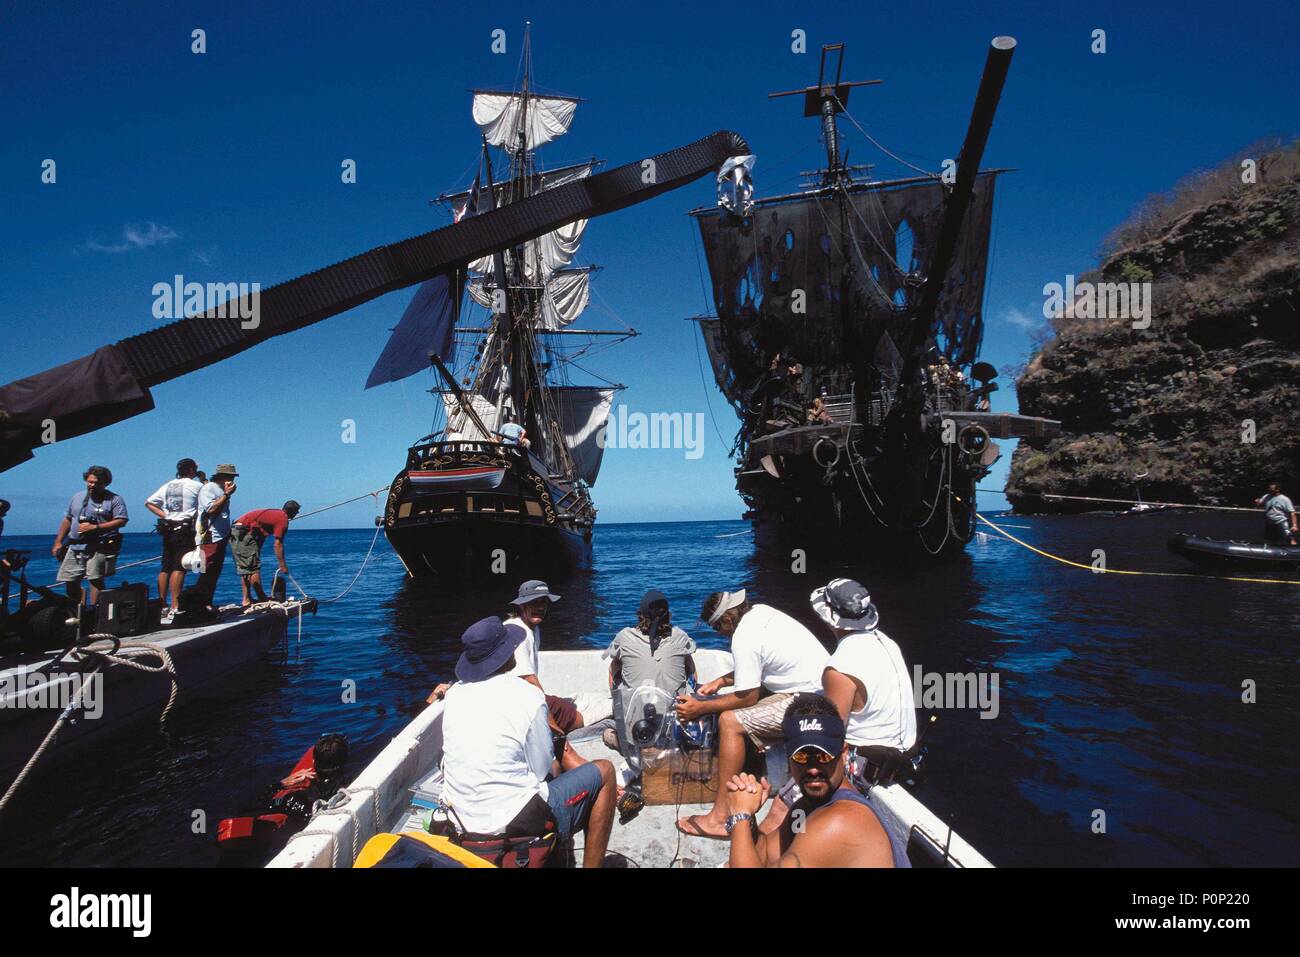 Piratas caribe perla fotografías e imágenes de alta resolución - Alamy